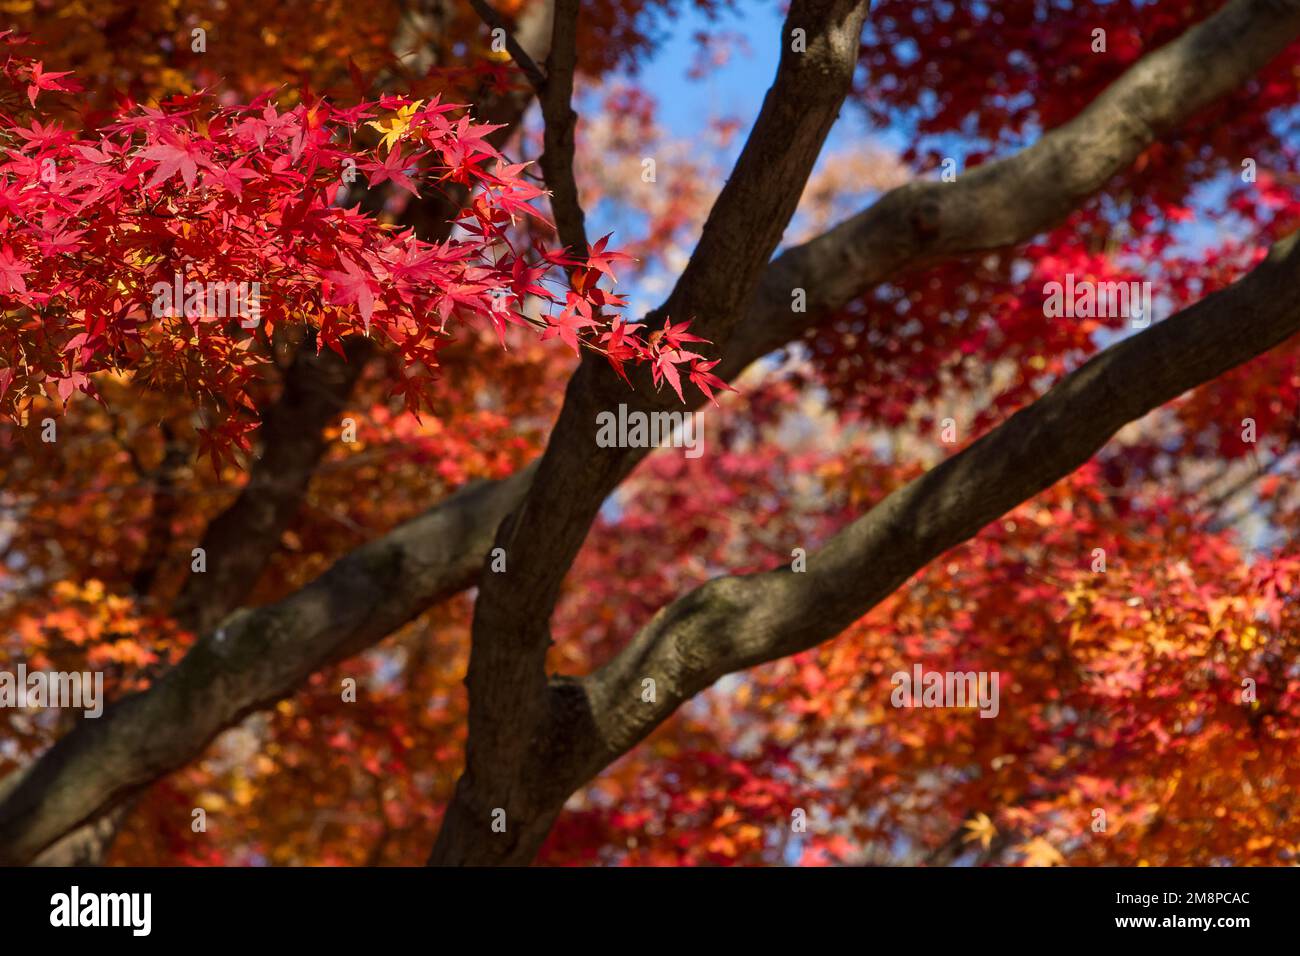 Red autumn leaves of Japanese maple trees (Acer palmatum) in Yoyogi park, Tokyo, Japan. Stock Photo